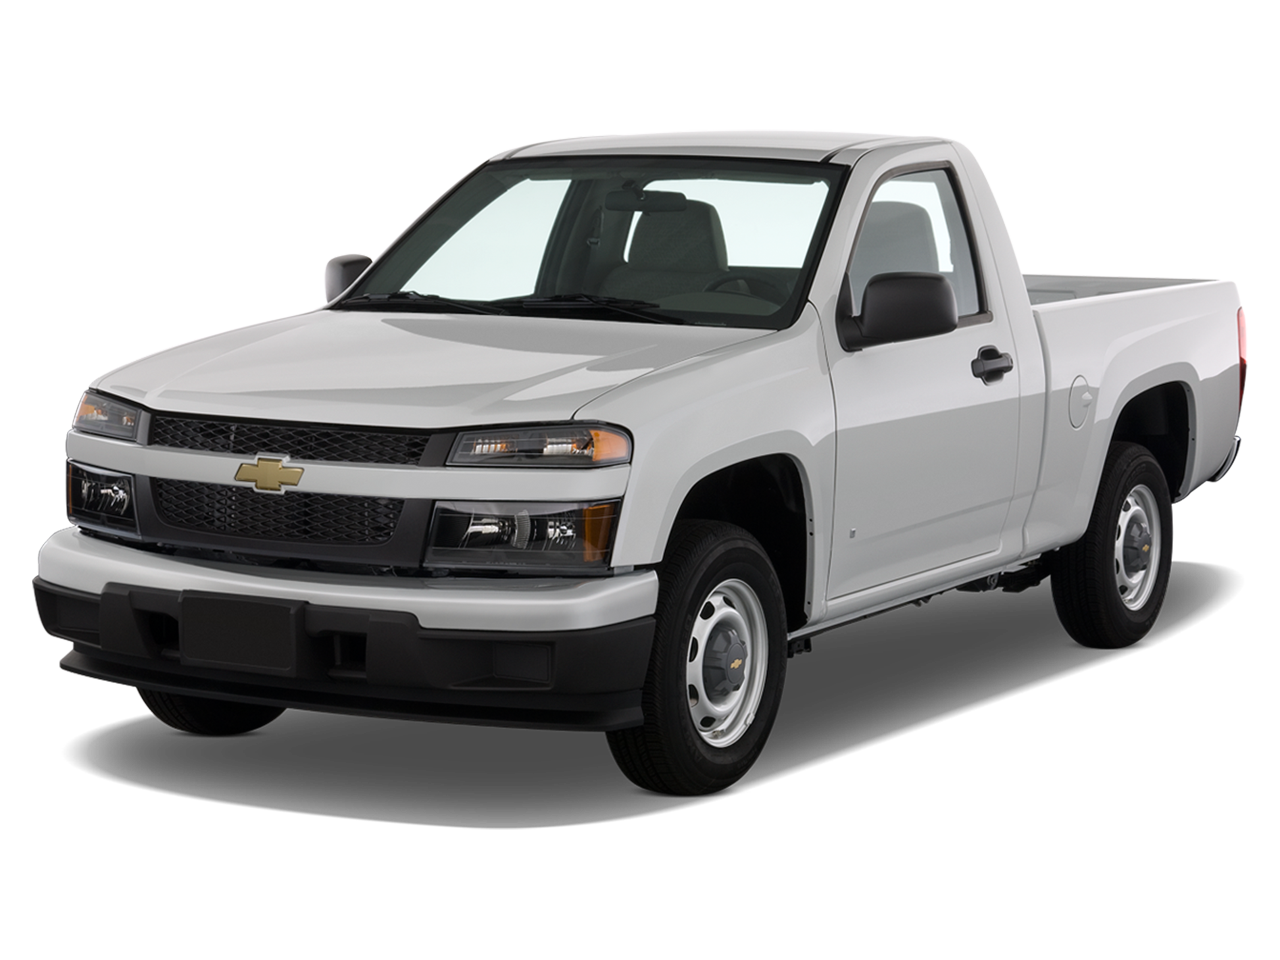 2012 Chevrolet Colorado Prices, Reviews, and Photos - MotorTrend